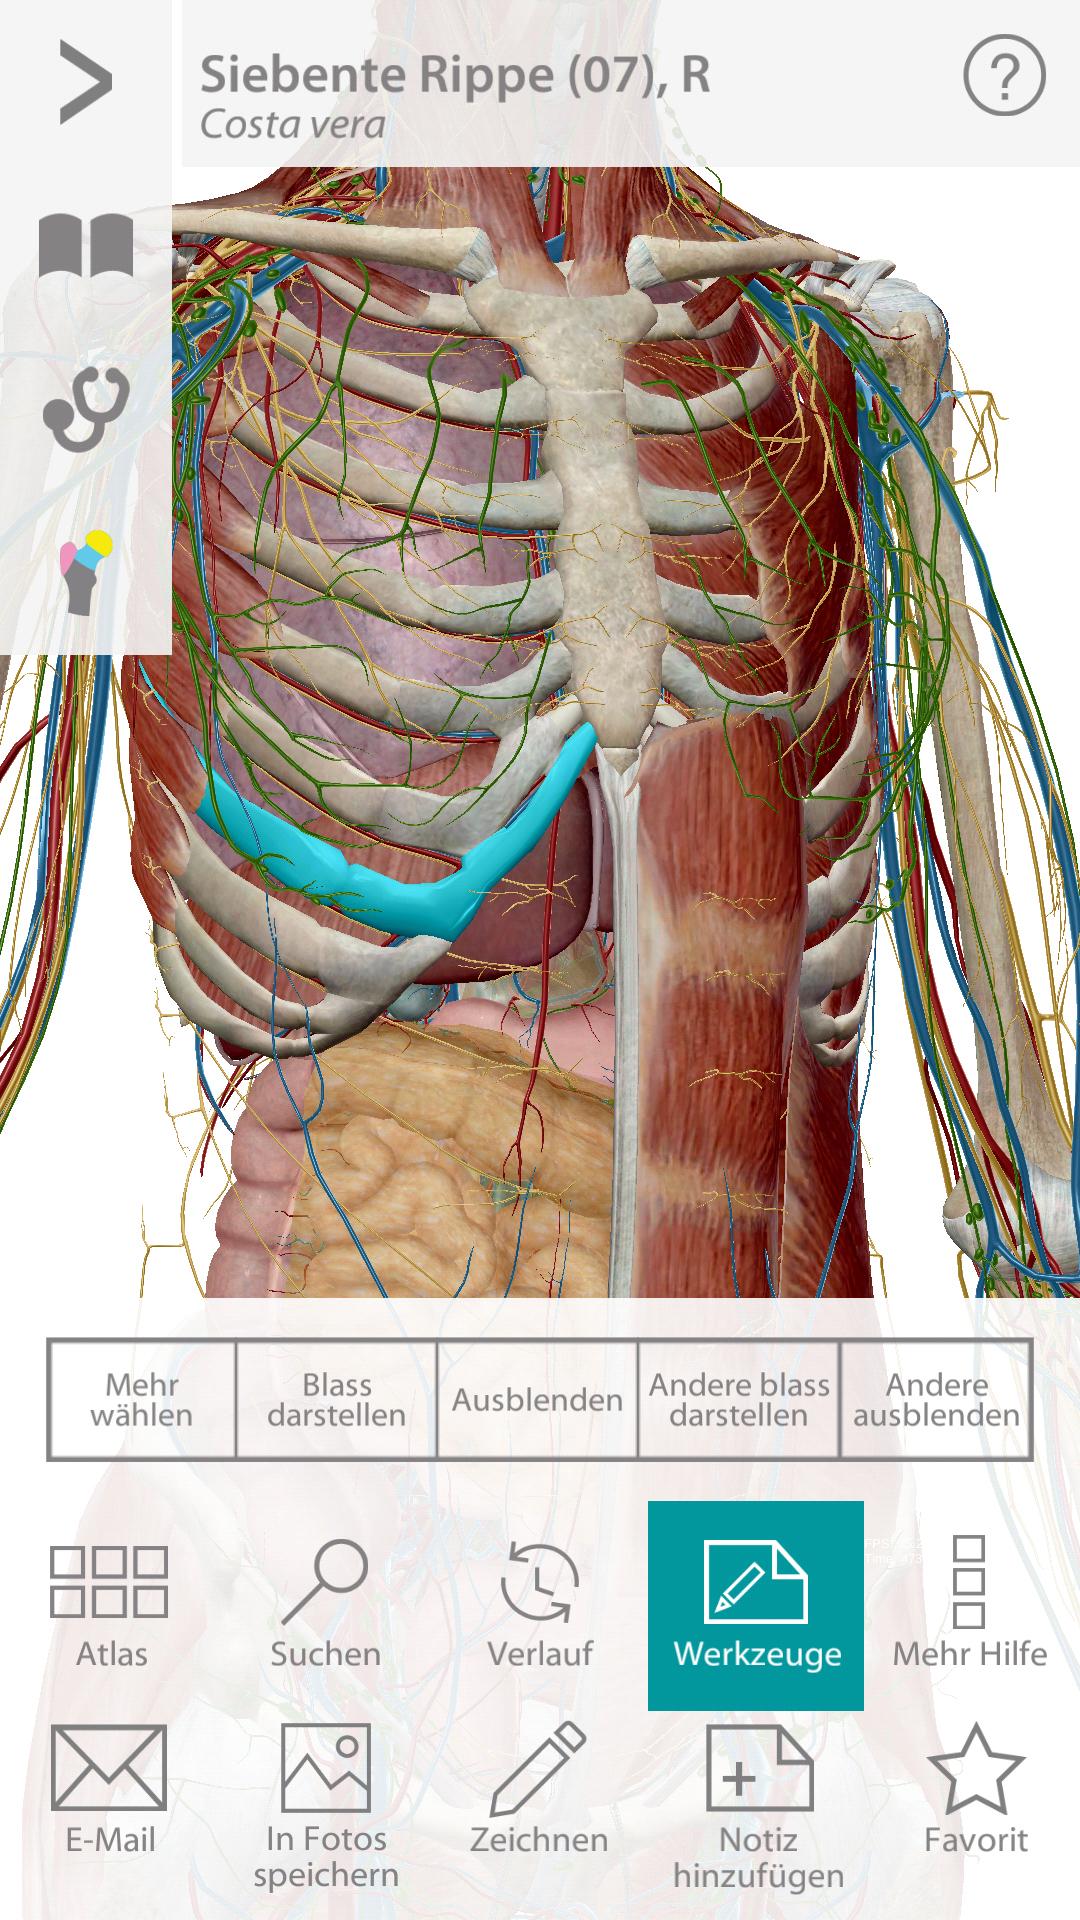 Android application Human Anatomy Atlas screenshort